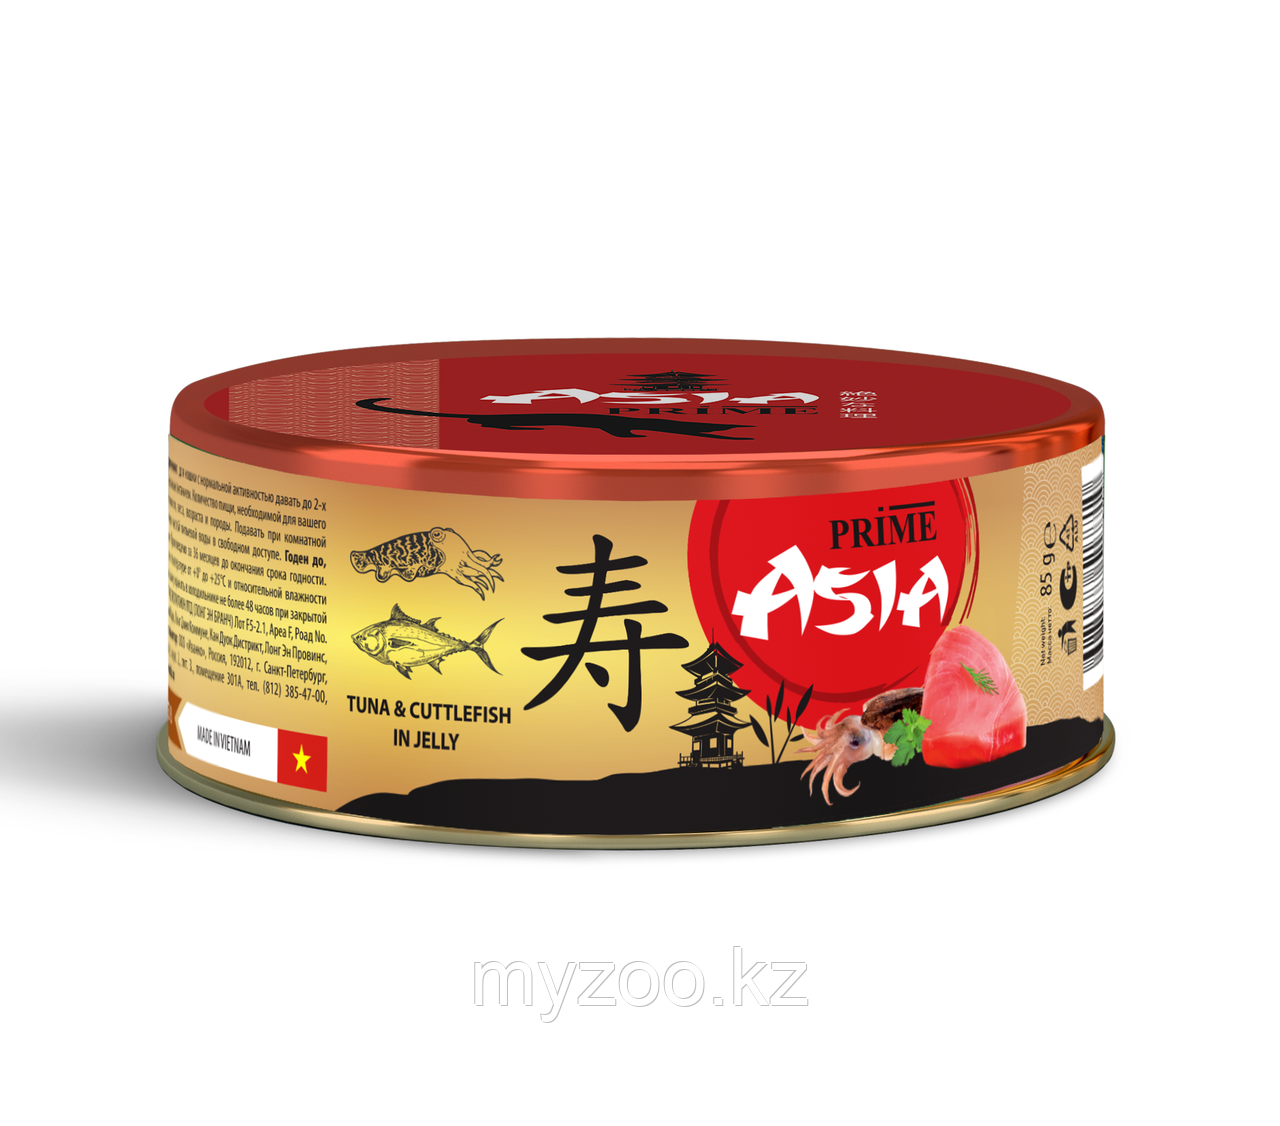 Prime Asia консервы для кошек тунец с каракатицей в желе, 85гр